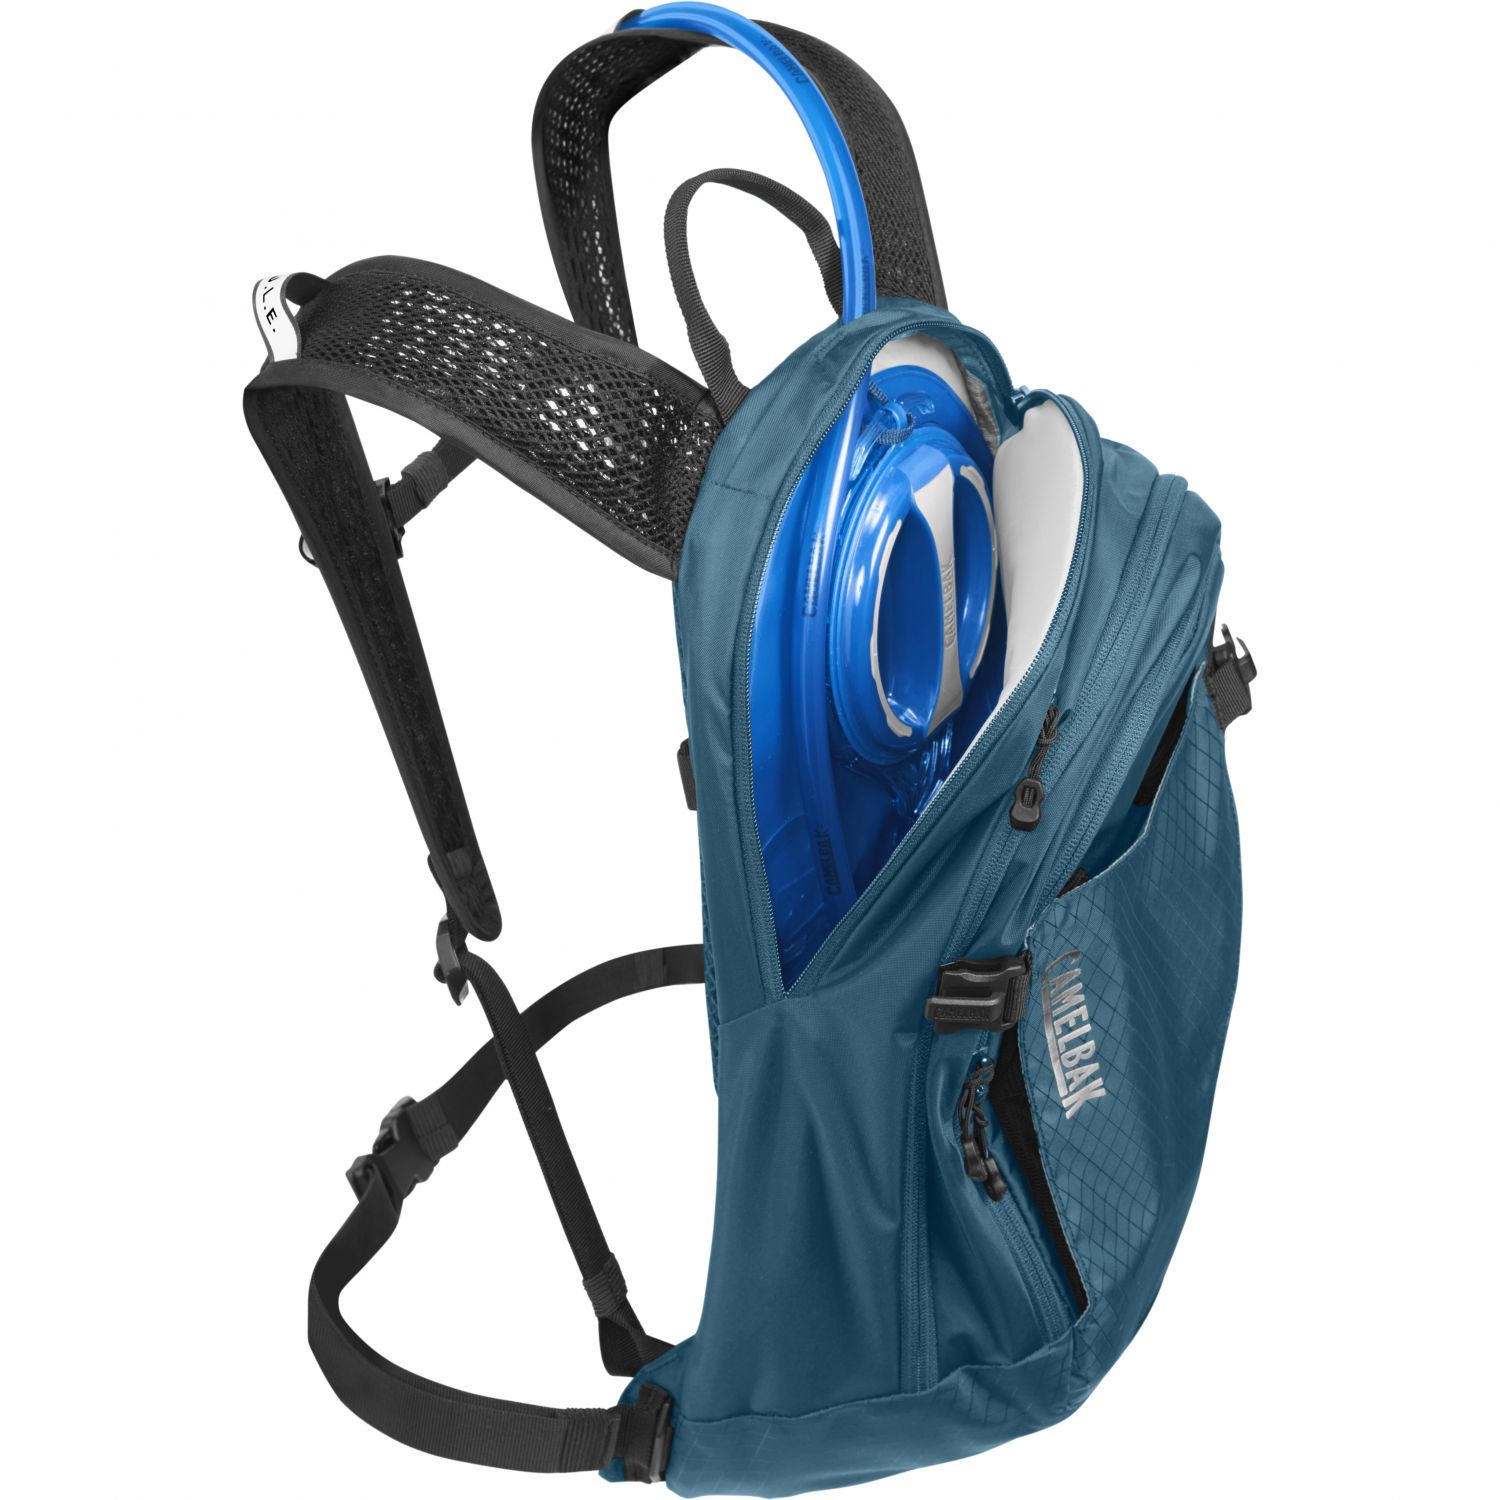 CamelBak M.U.L.E. 12, backpack, 3L, moroccan blue/black